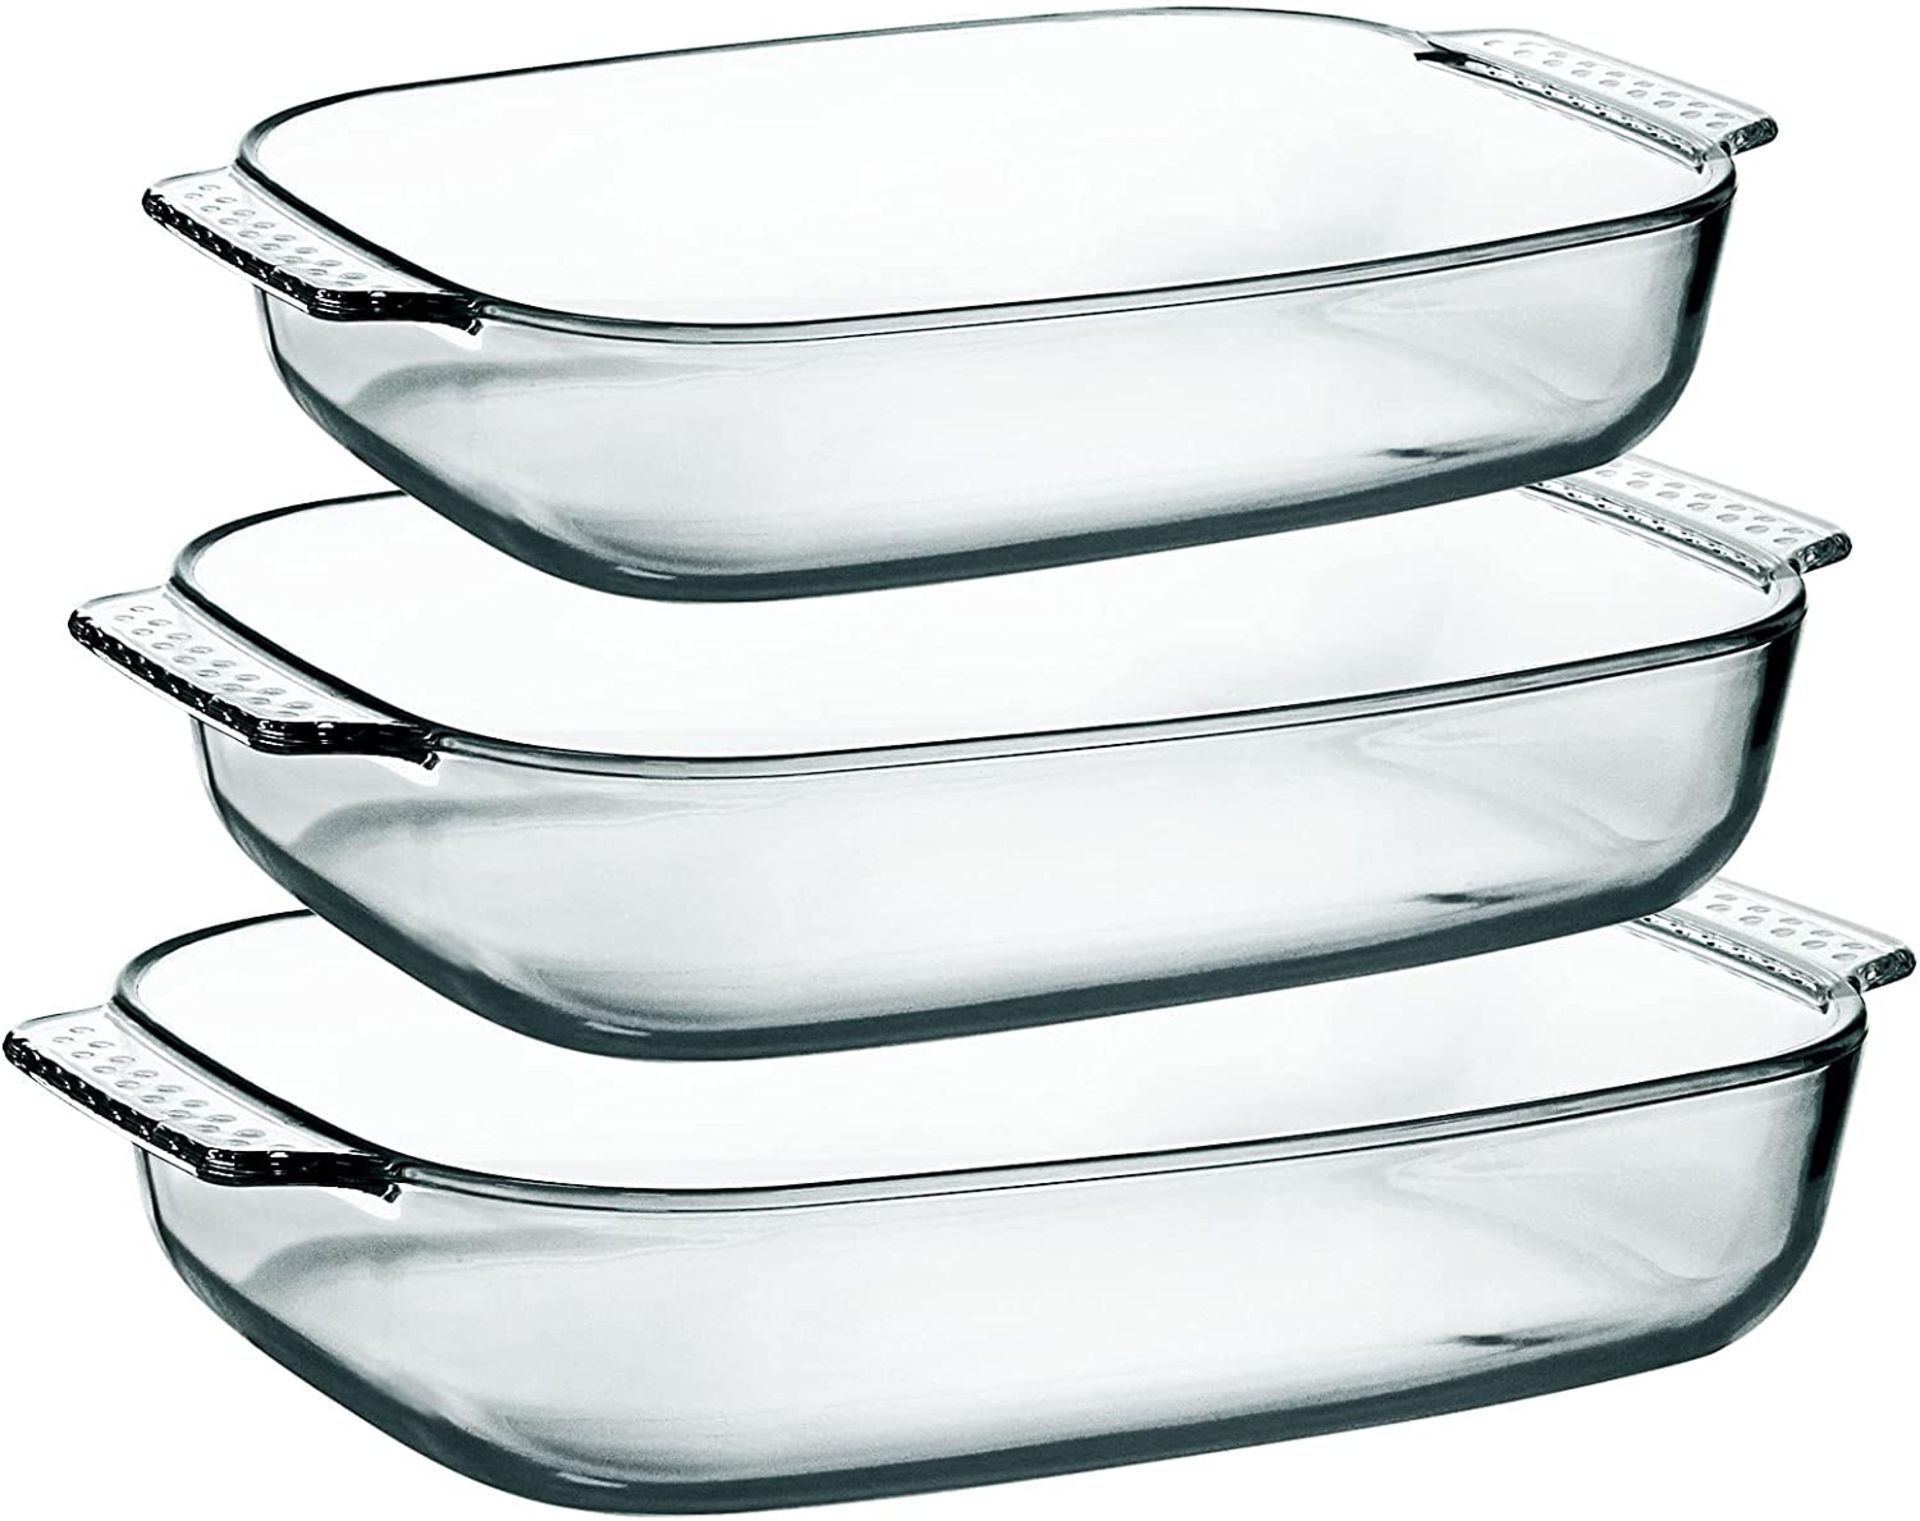 New O'cuisine Set Of 3 Glass Oven Dishes - 3.6L, 2.6L & 2L